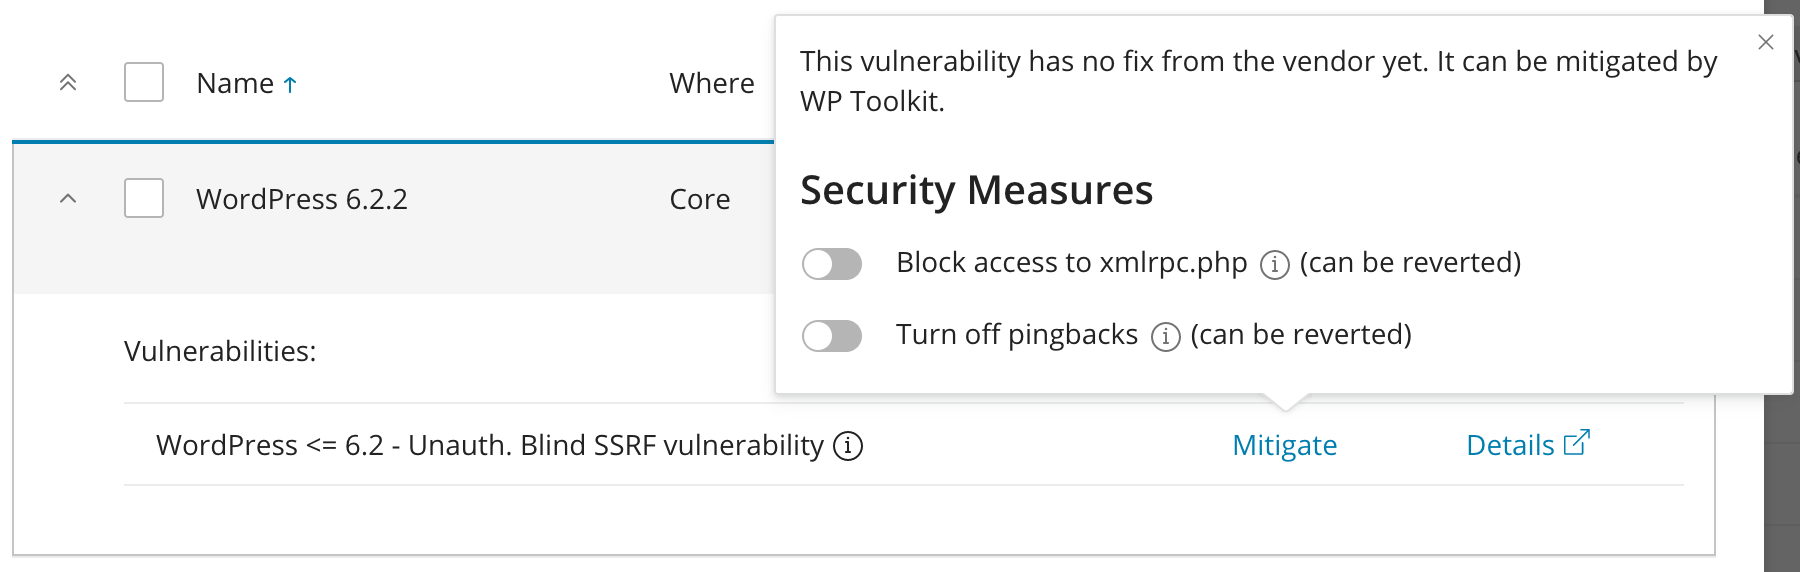 WordPress Toolkit Security Check - WordPress Vulnerabilities - Mitigate